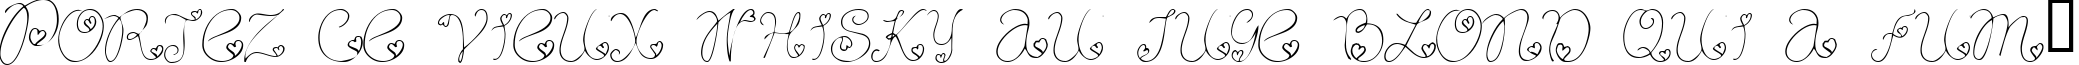 Пример написания шрифтом Craftopia Love текста на французском